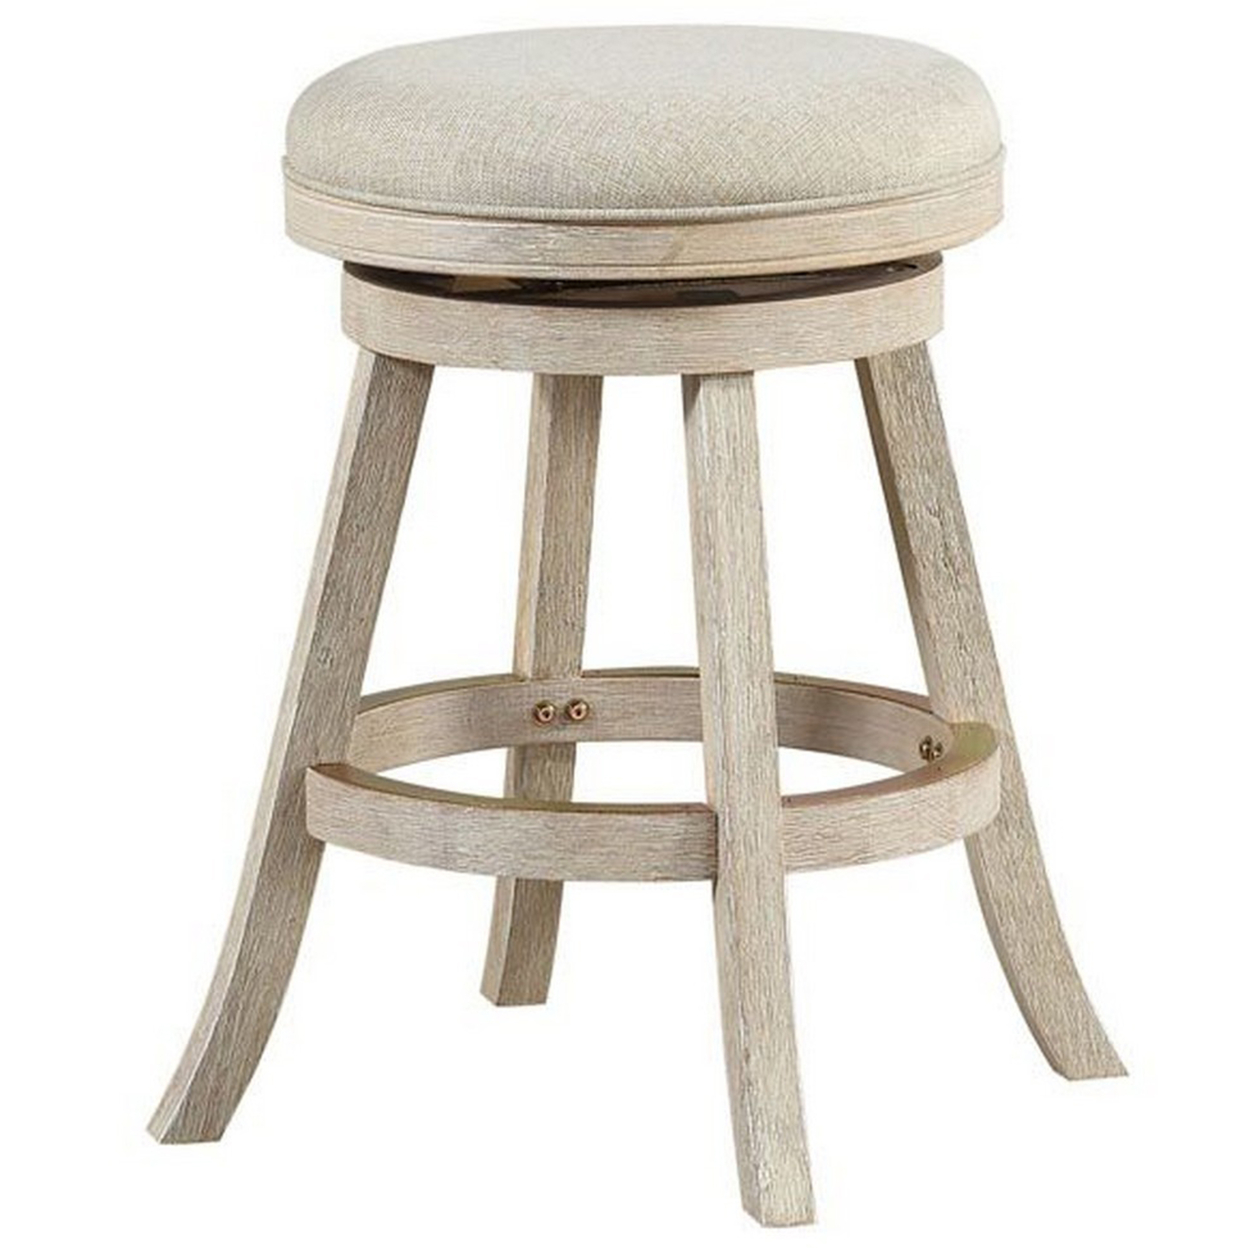 Wooden Swivel Counter Stool With Round Fabric Seat, Gray- Saltoro Sherpi